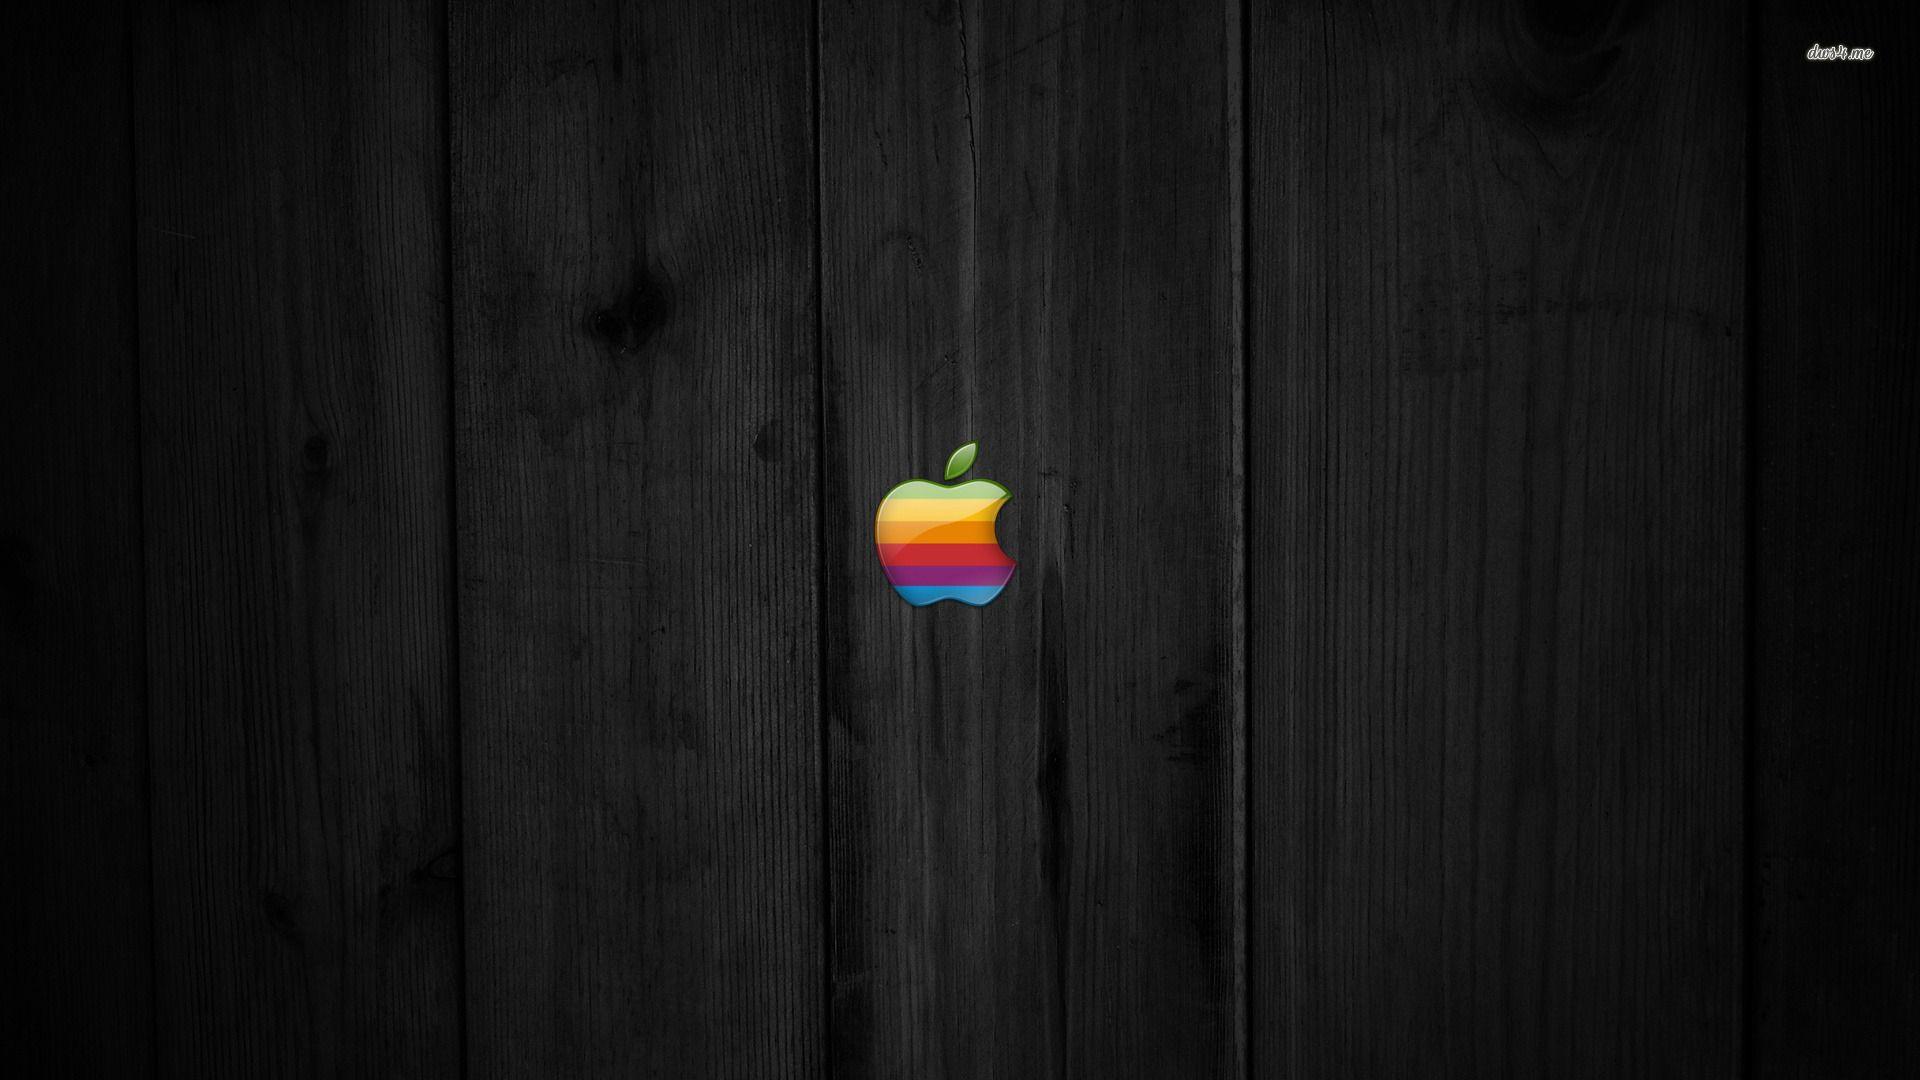 Rainbow Apple Logo on Wood wallpaper wallpaper